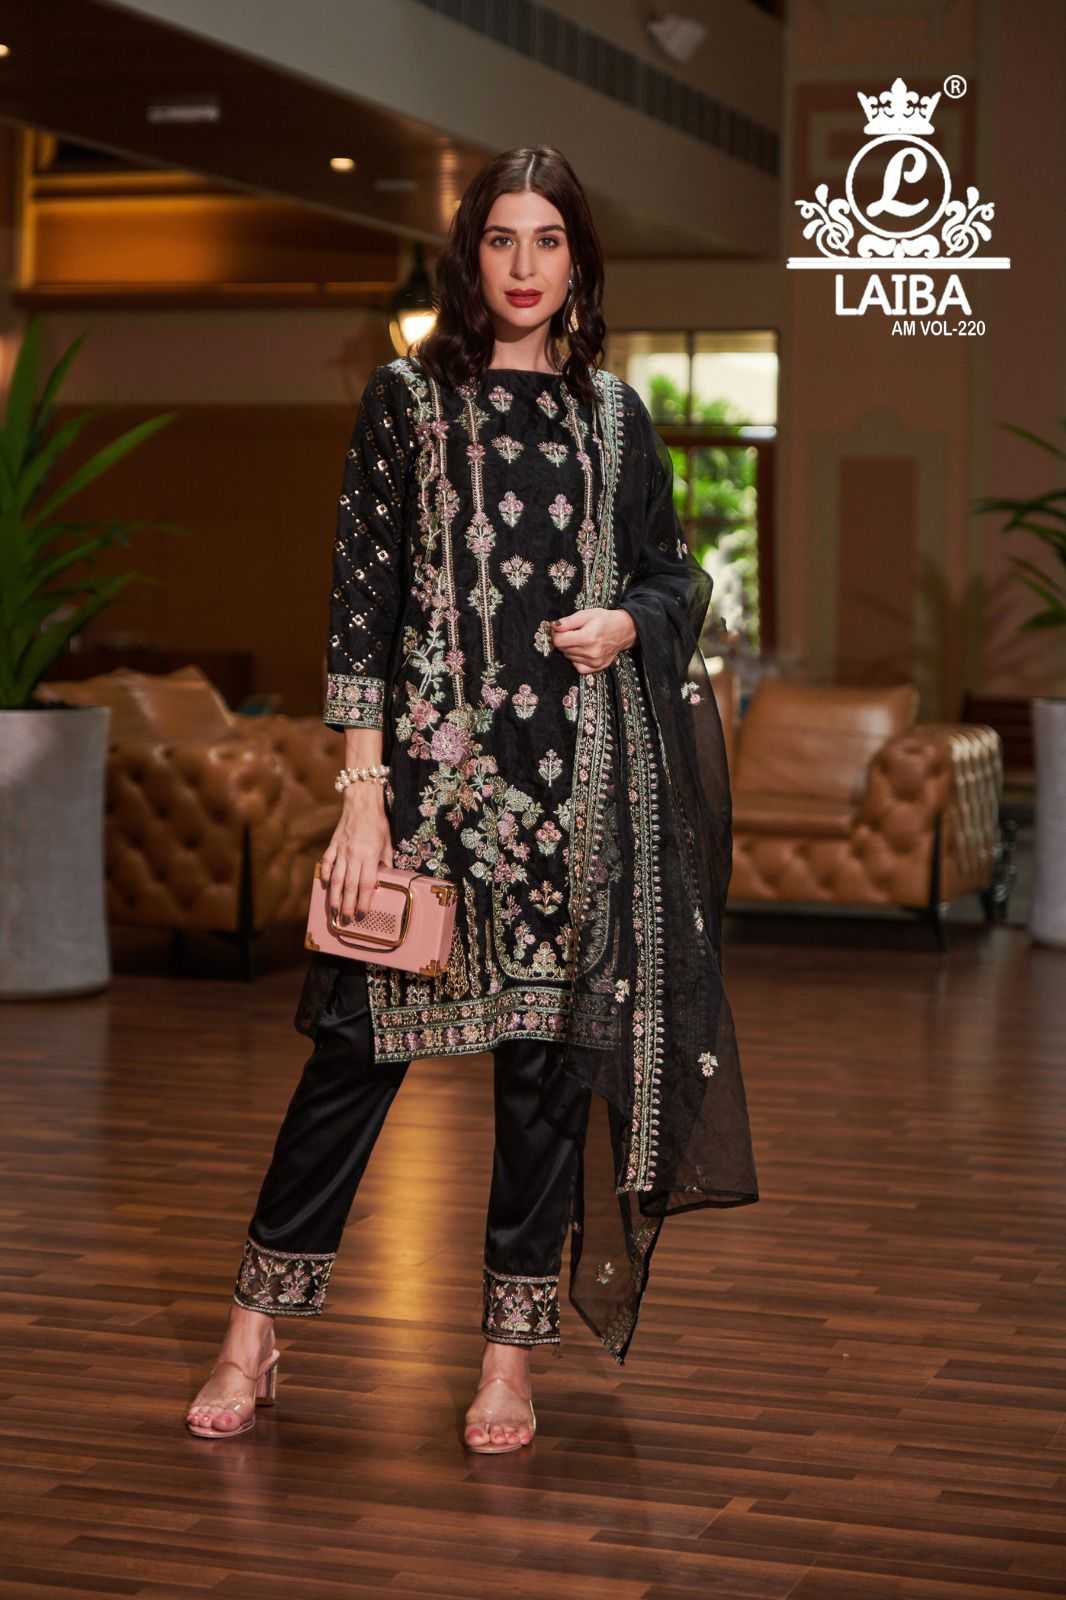 laiba designer am vol 220 pakistani readymade designer 3pcs set